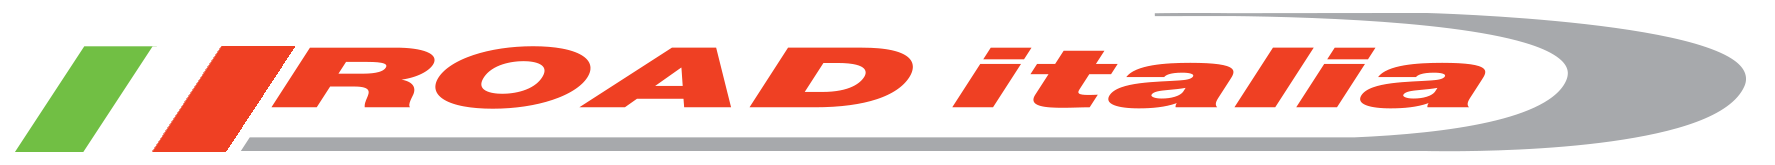 roaditalia_logo